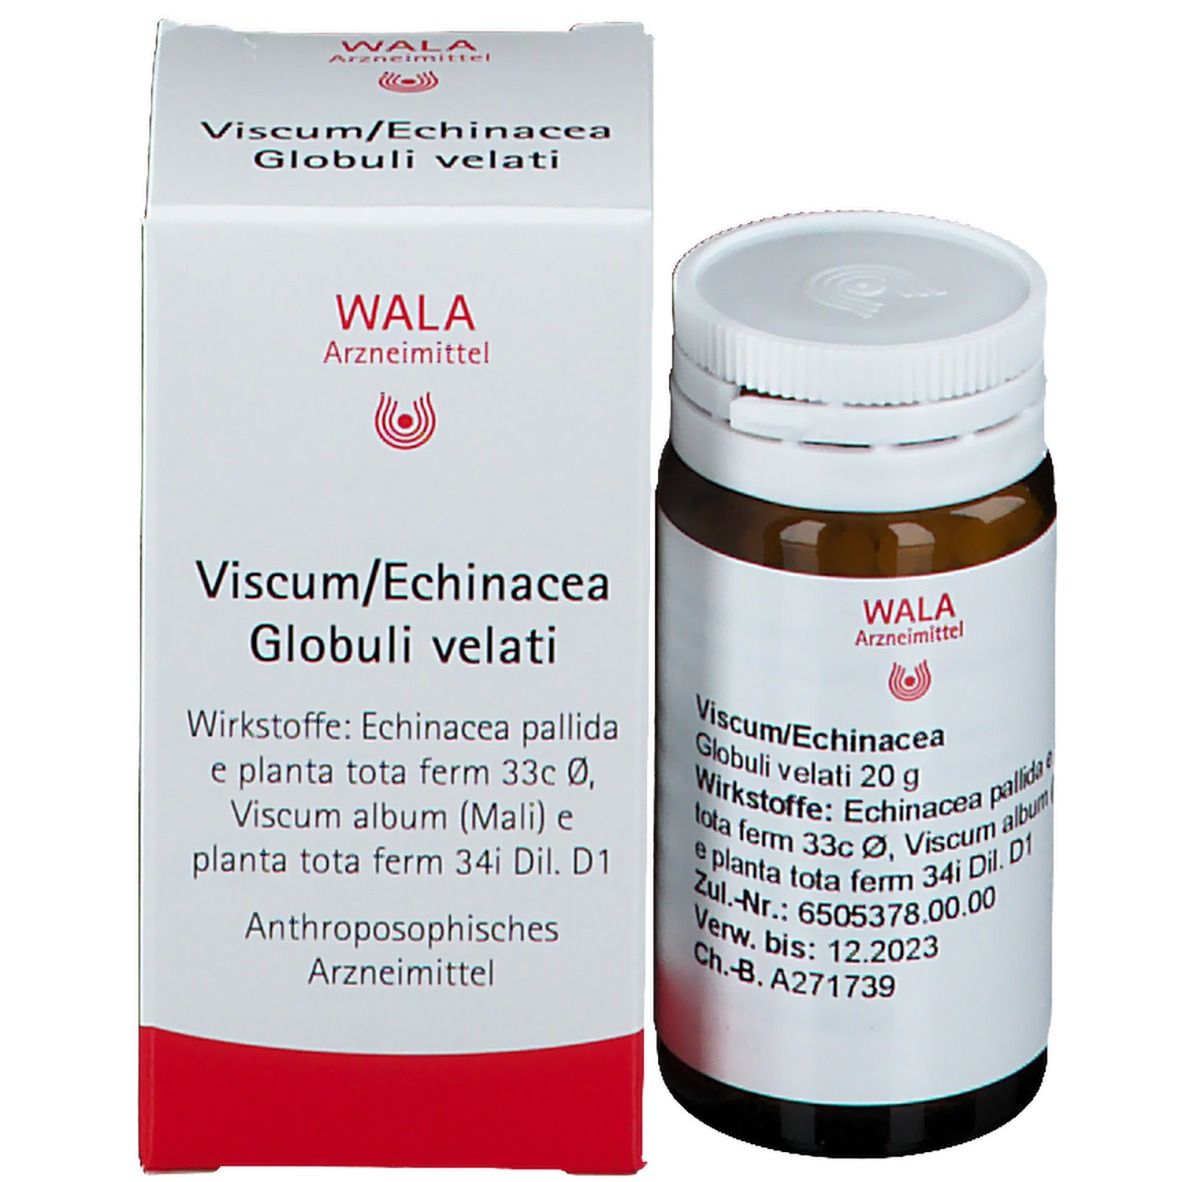 WALA® Viscum Echinacea Globuli